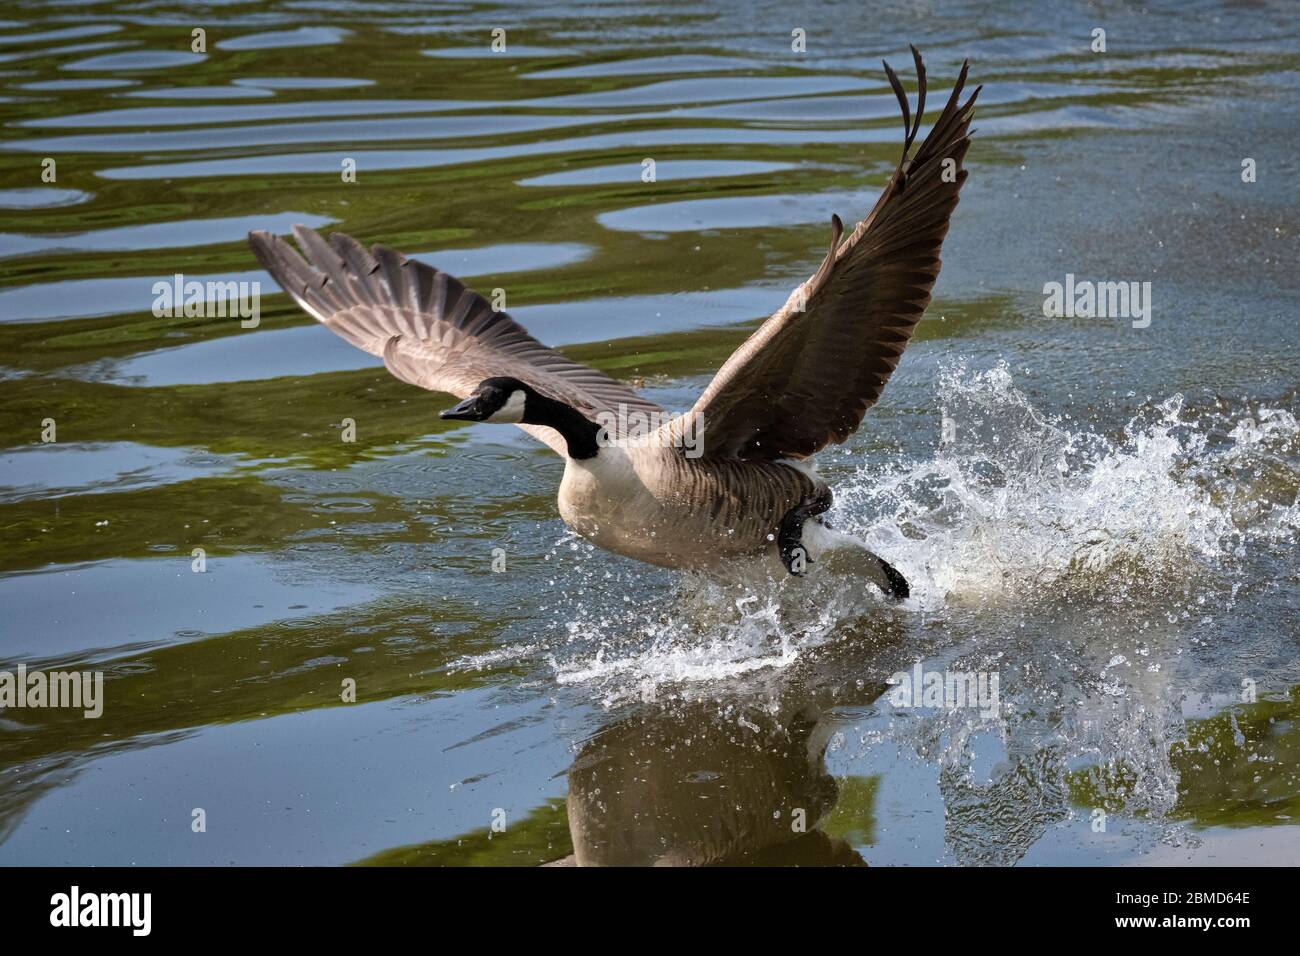 Canada Goose (Branta canadensis) taking flight, River Weaver, Cheshire, England, UK Stock Photo